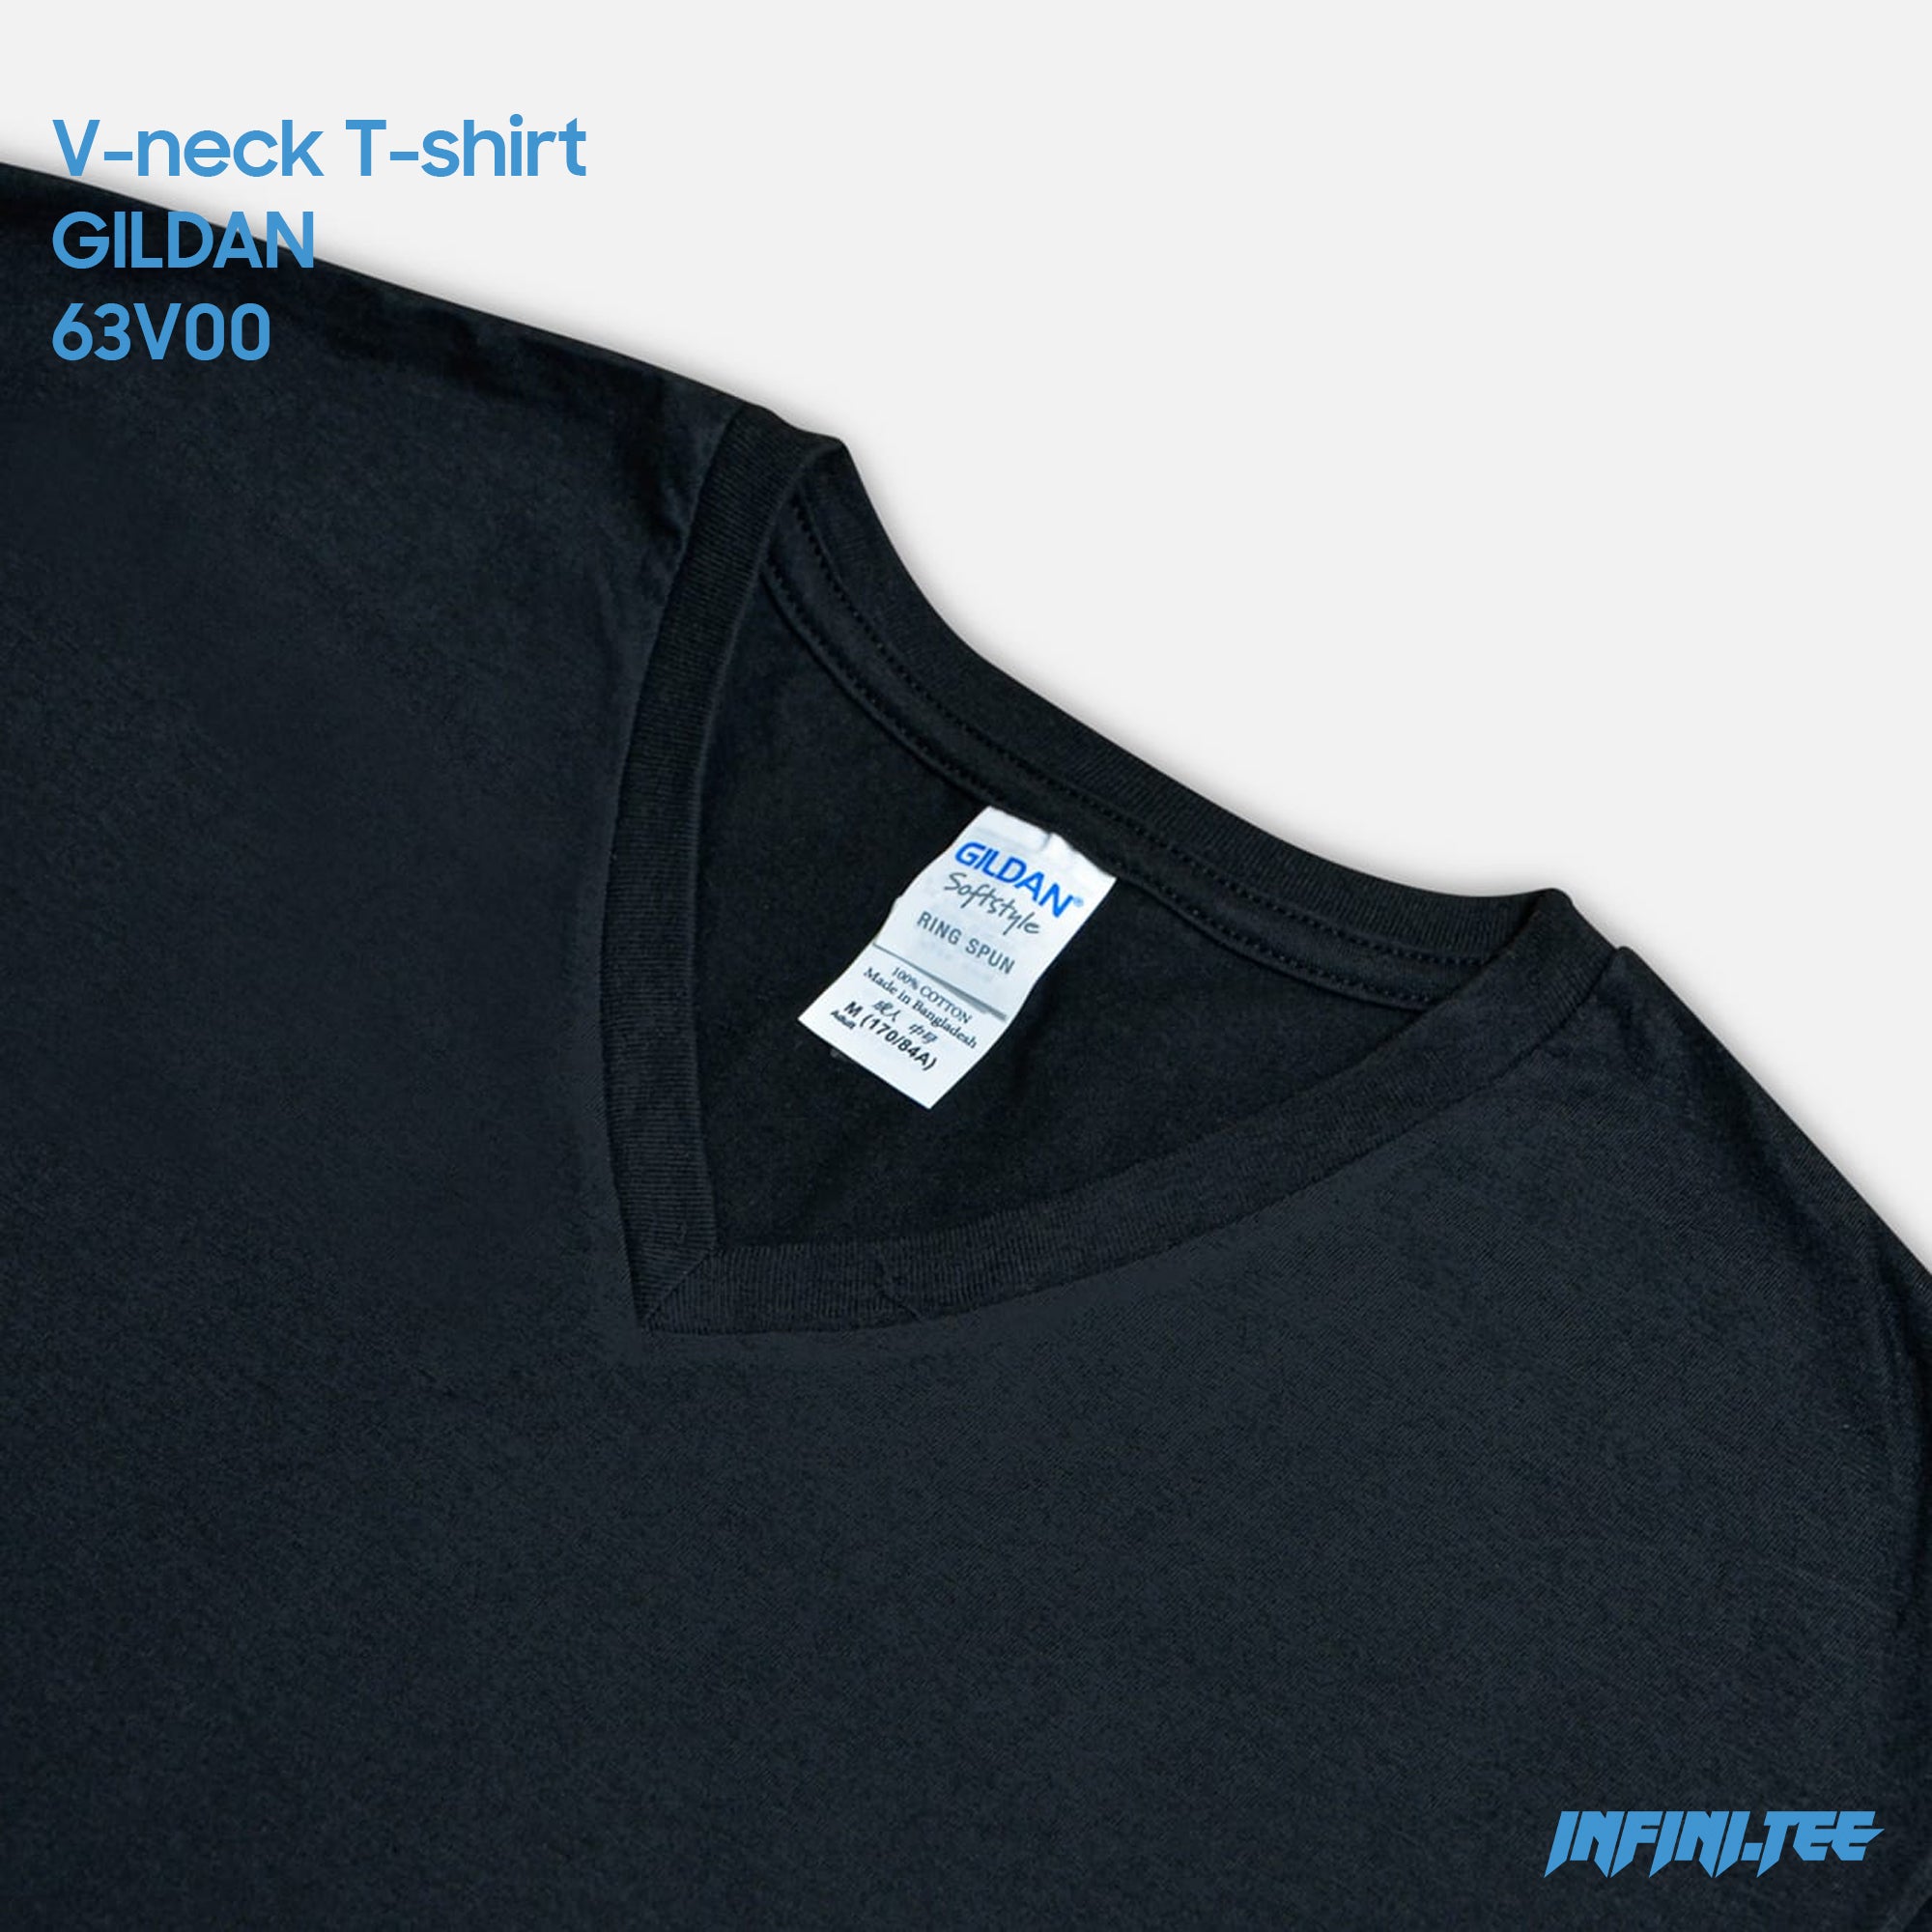 V-NECK T-shirt 63V00 GILDAN - BLACK